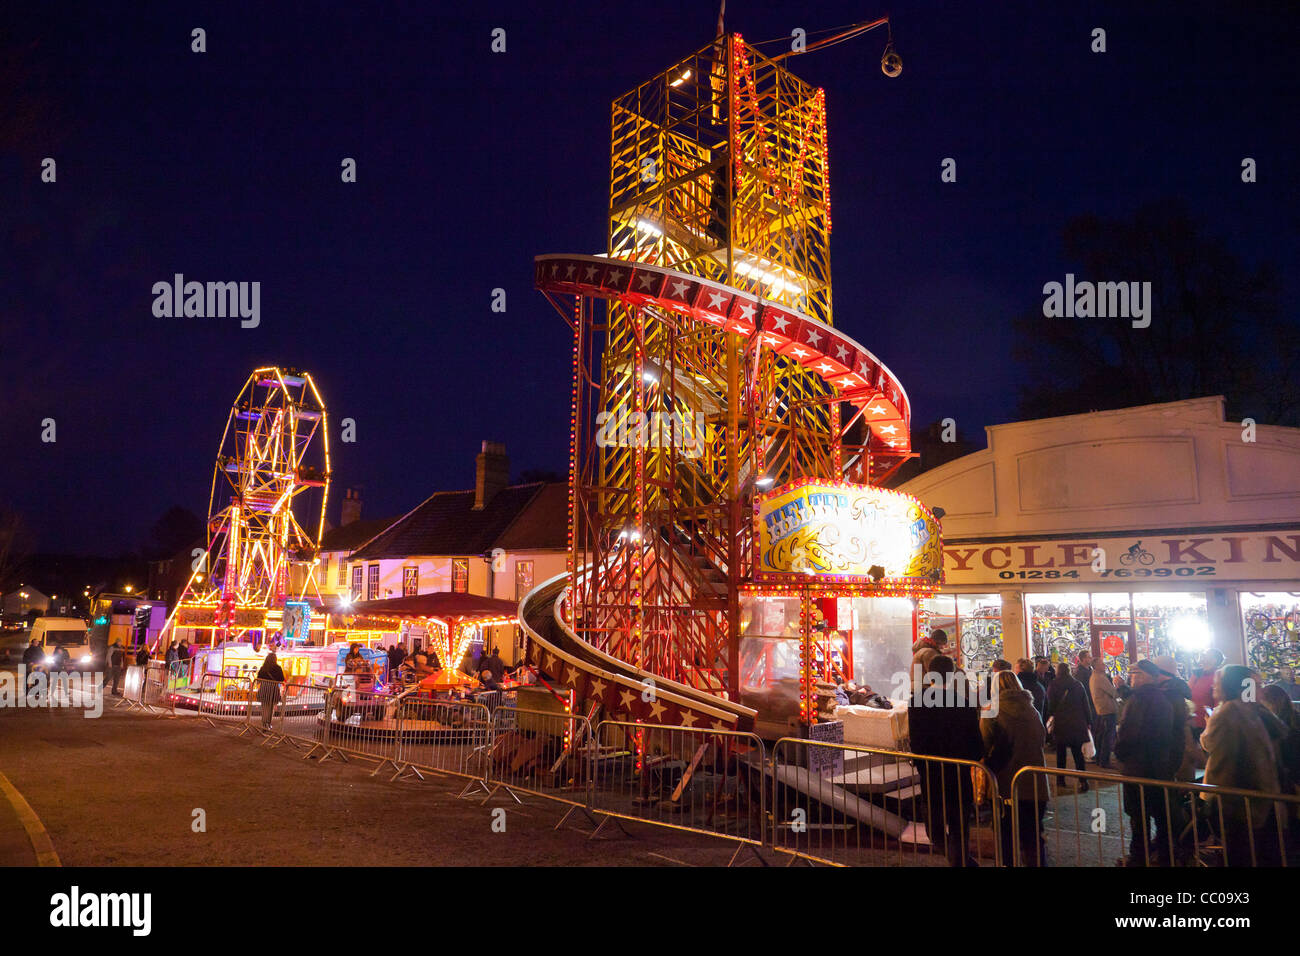 funfair at night in Bury St Edmunds, Suffolk UK Stock Photo